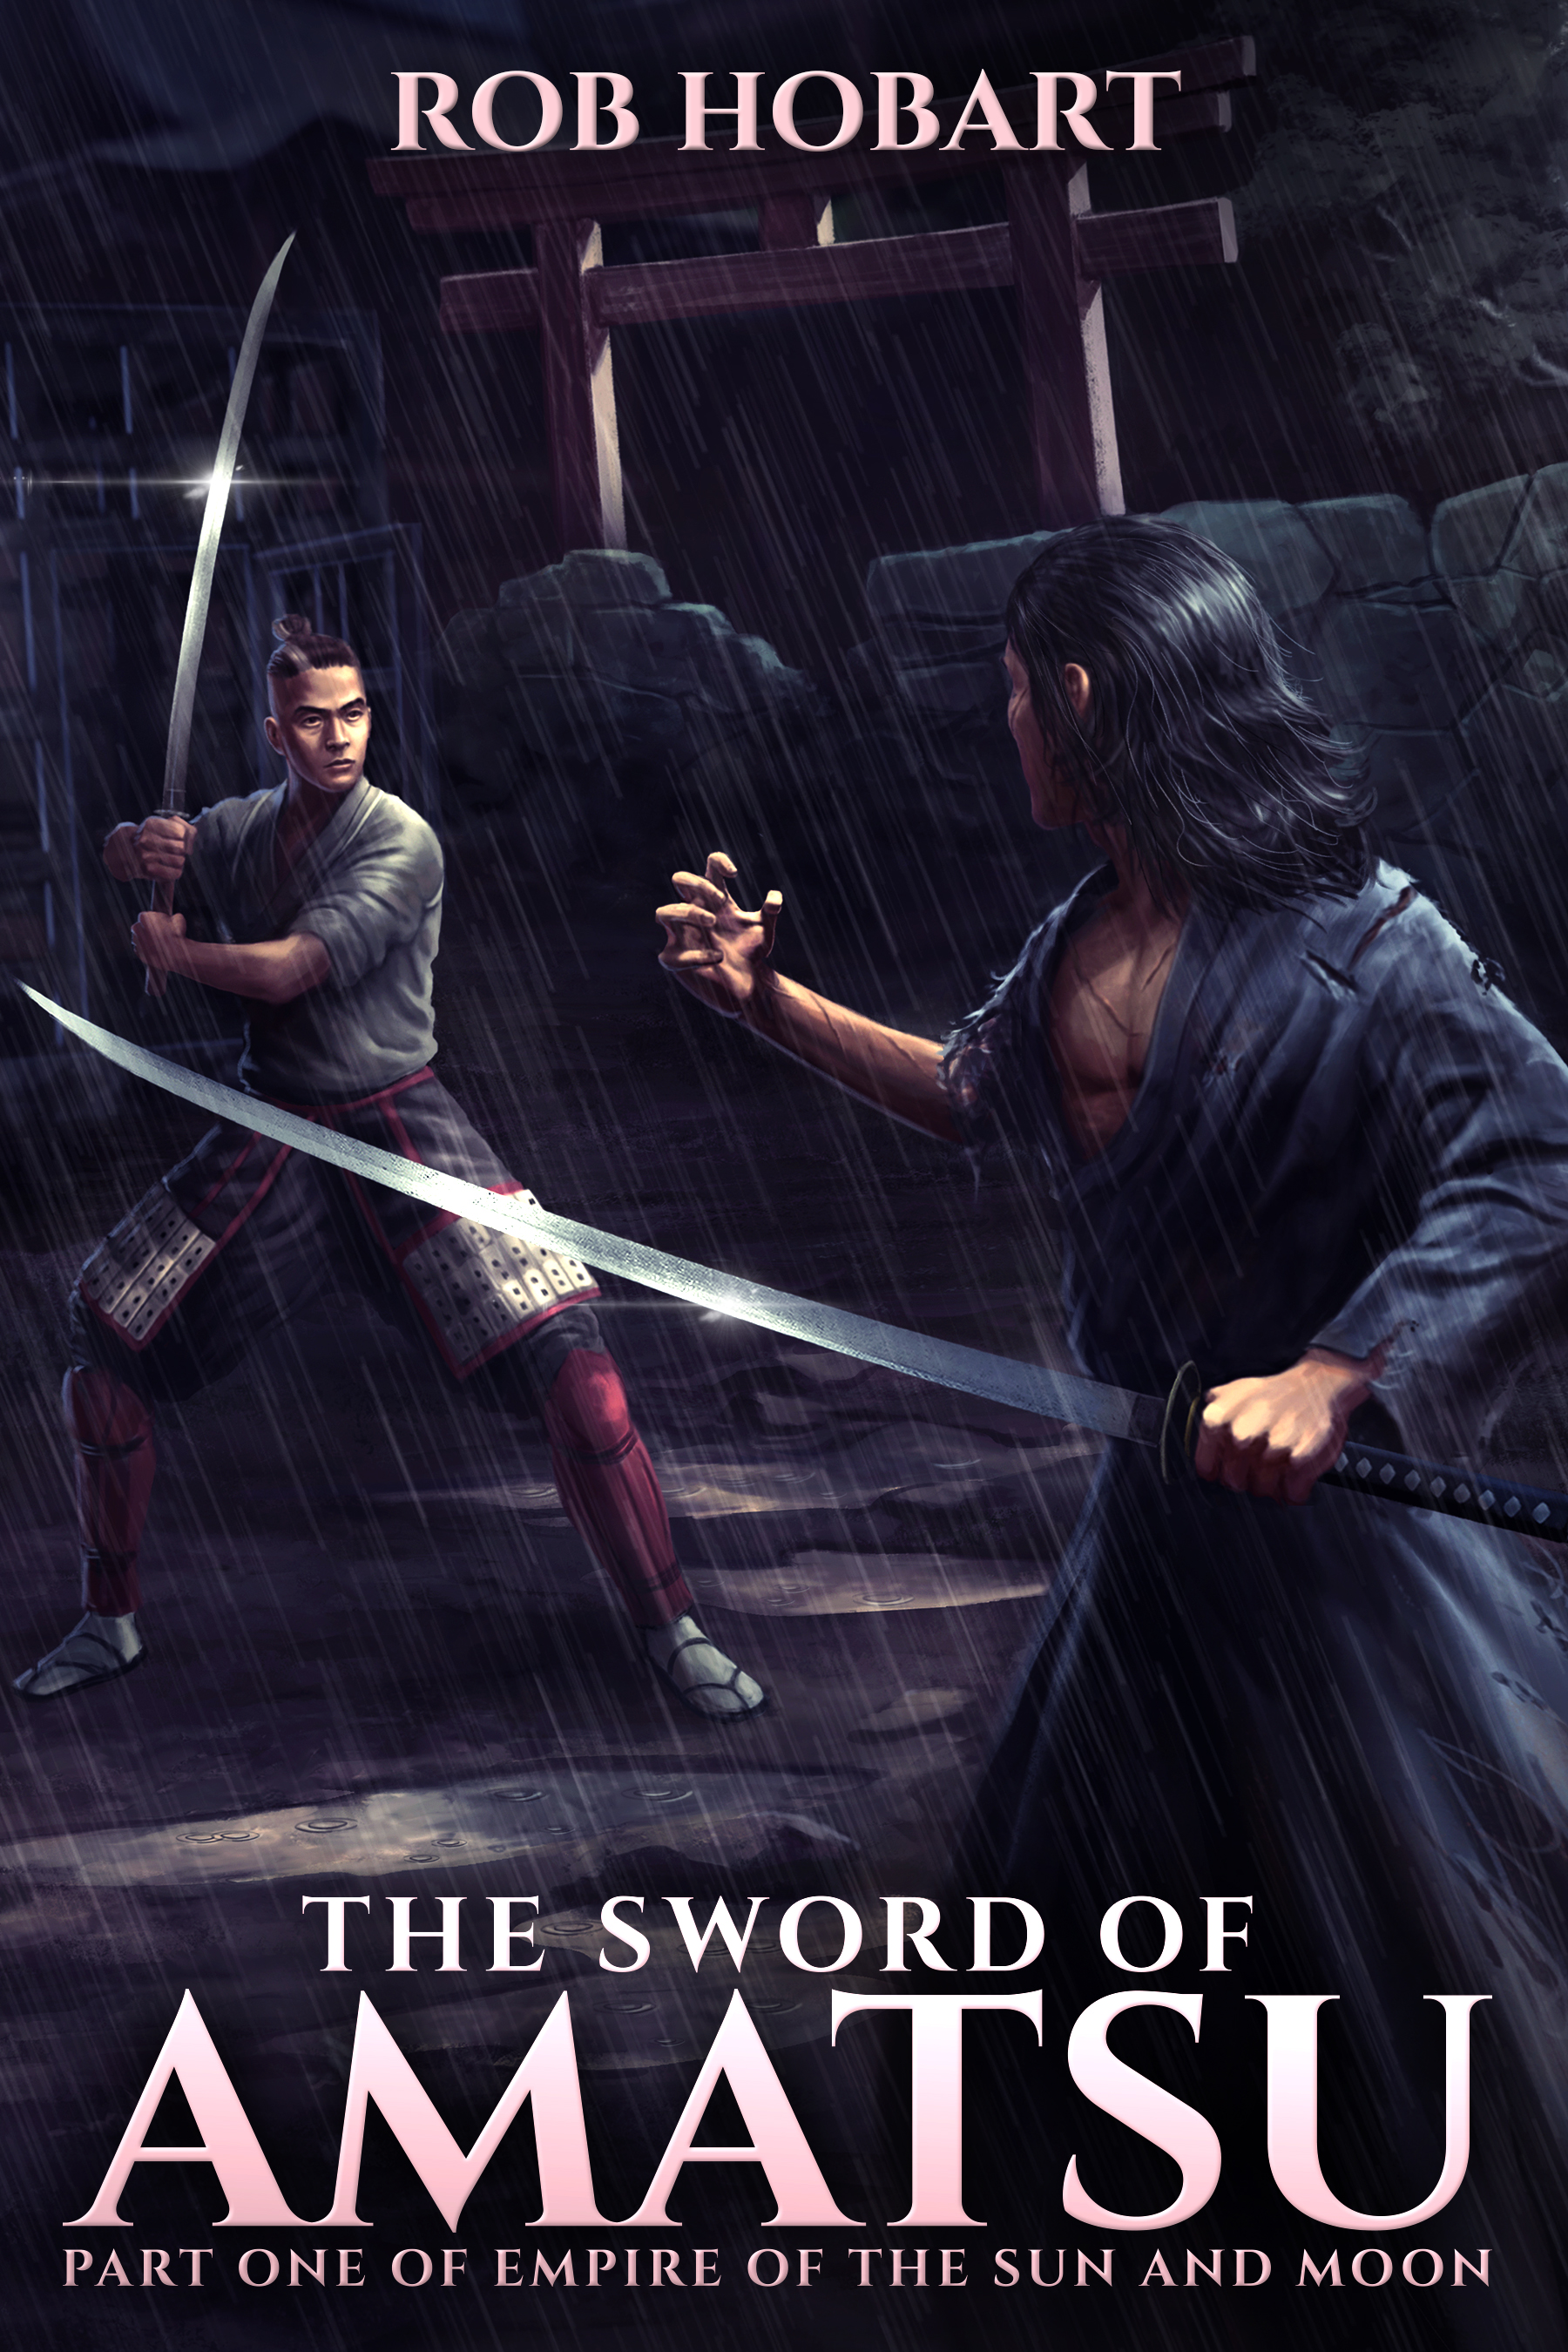 The Sword of Amatsu